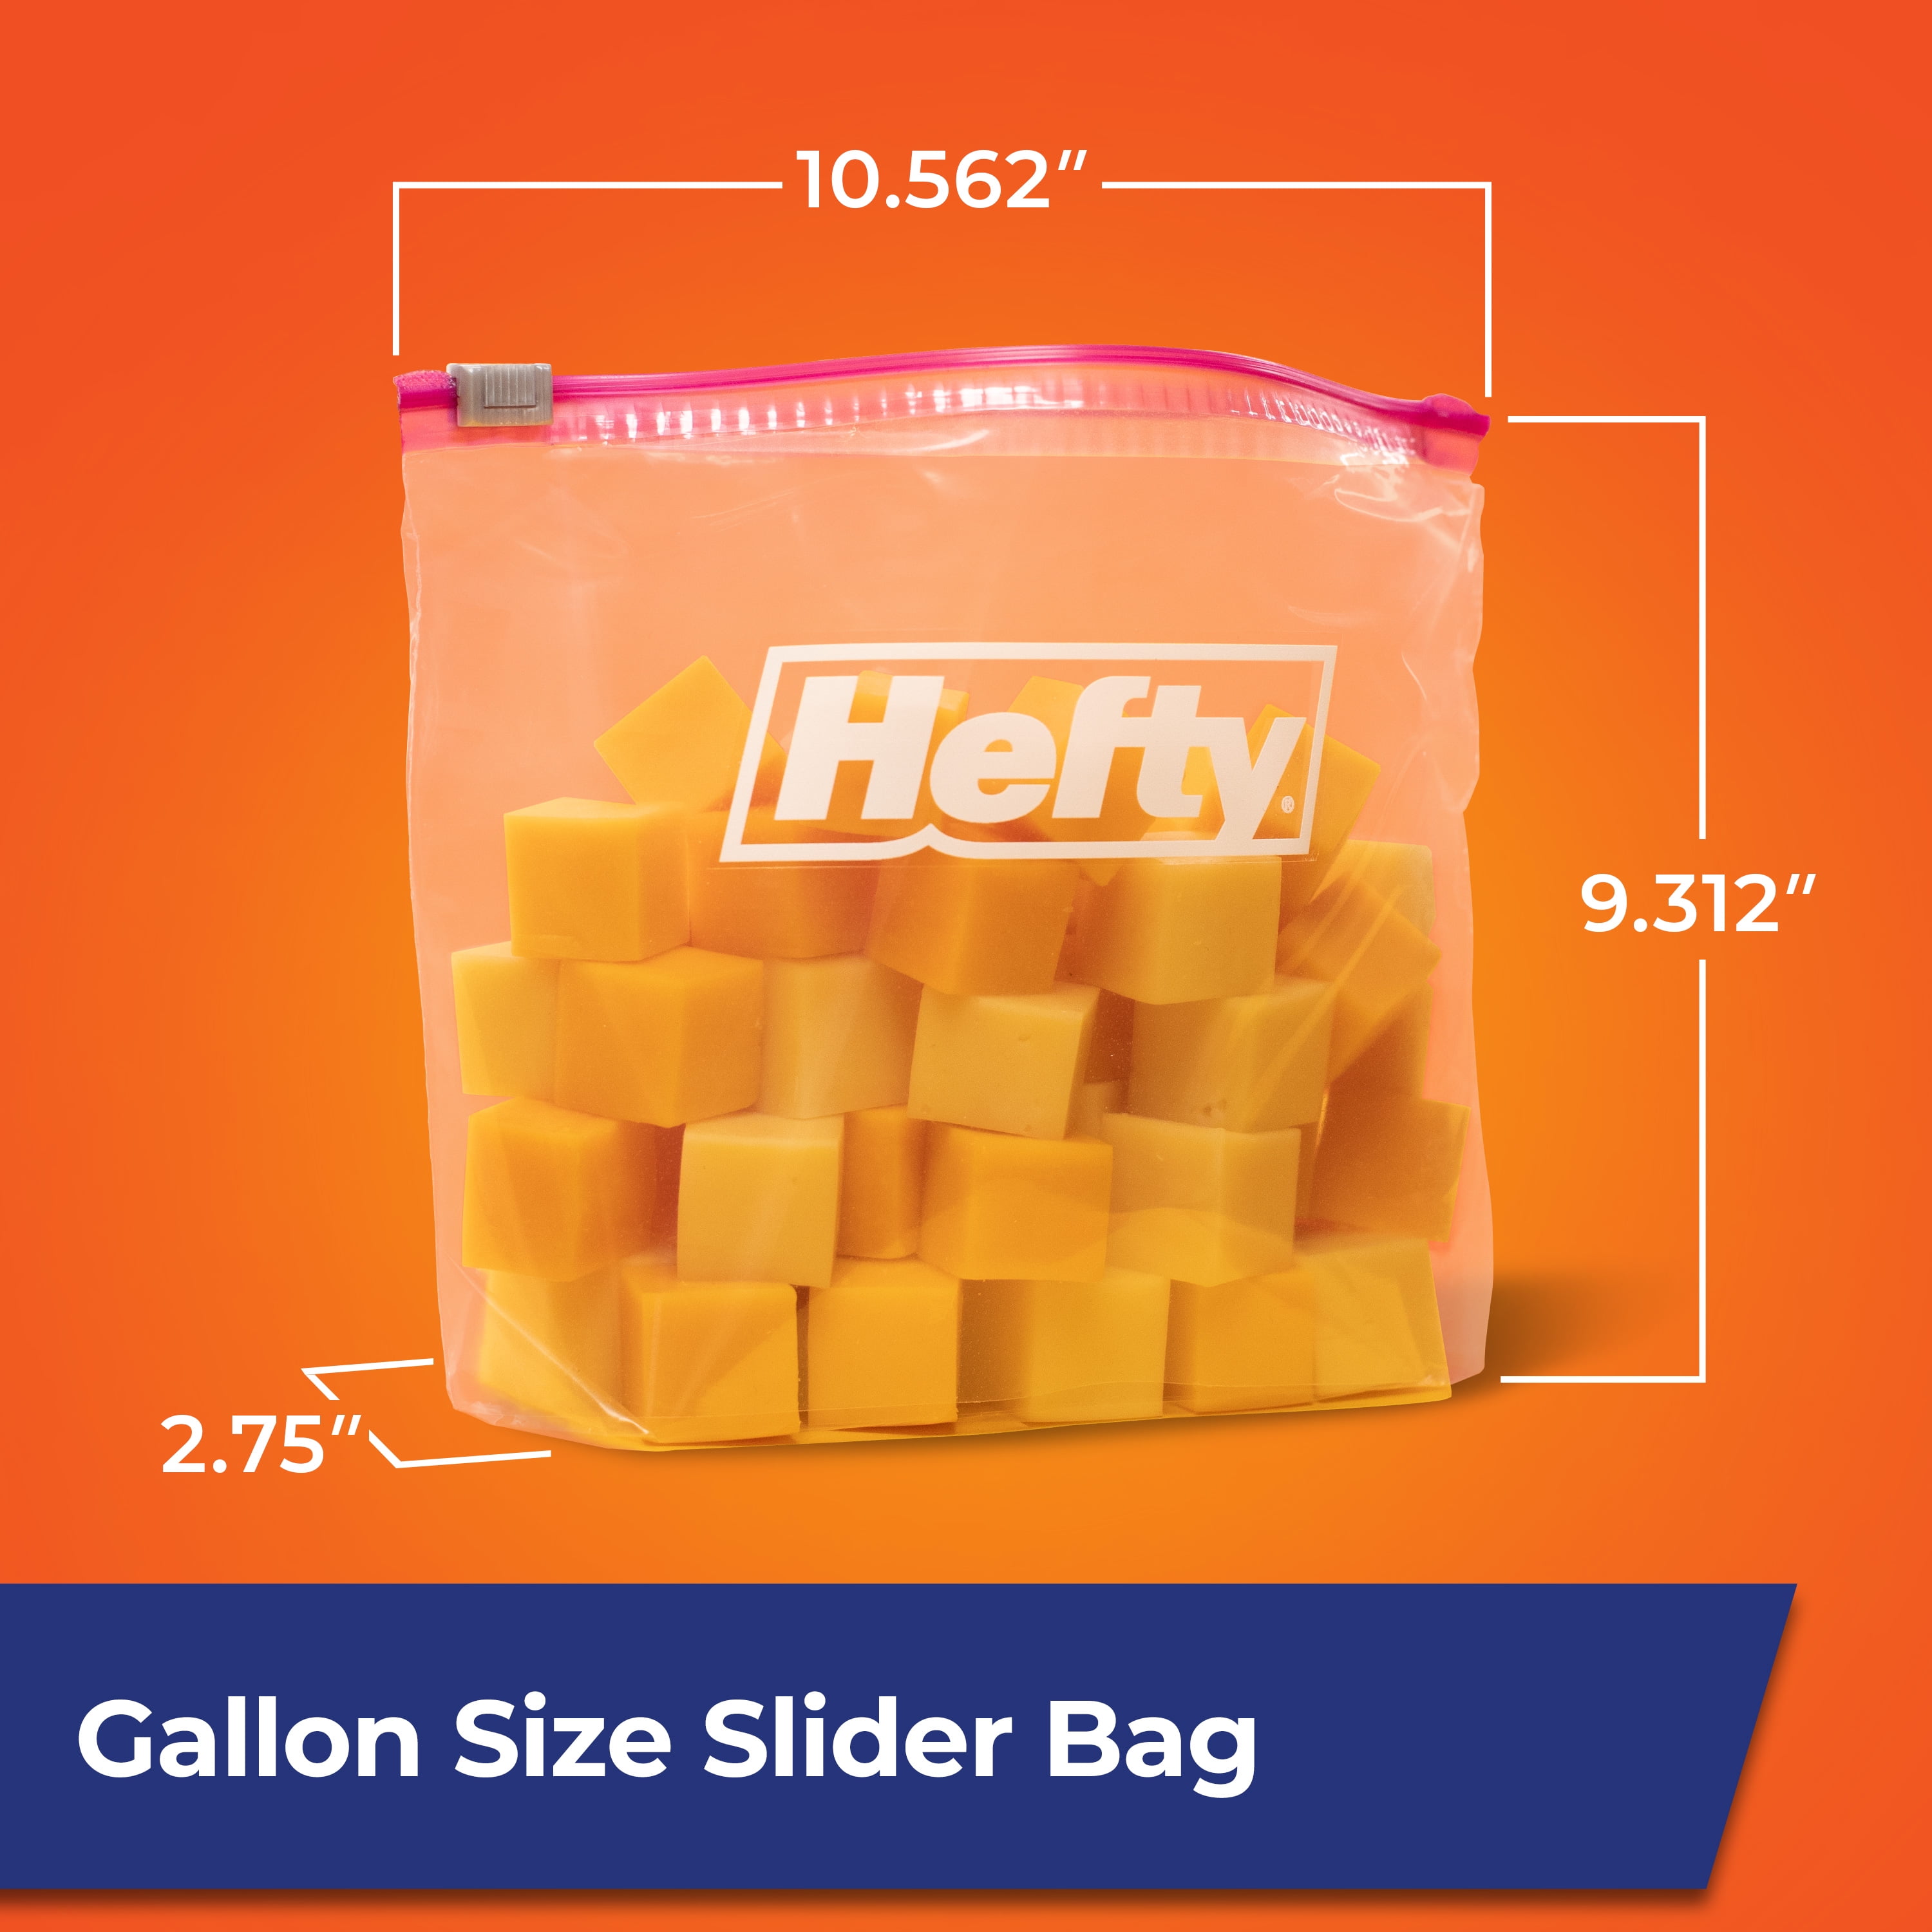 Hefty® Slider Half Gallon Food Storage Bags, 32 ct - Pick 'n Save